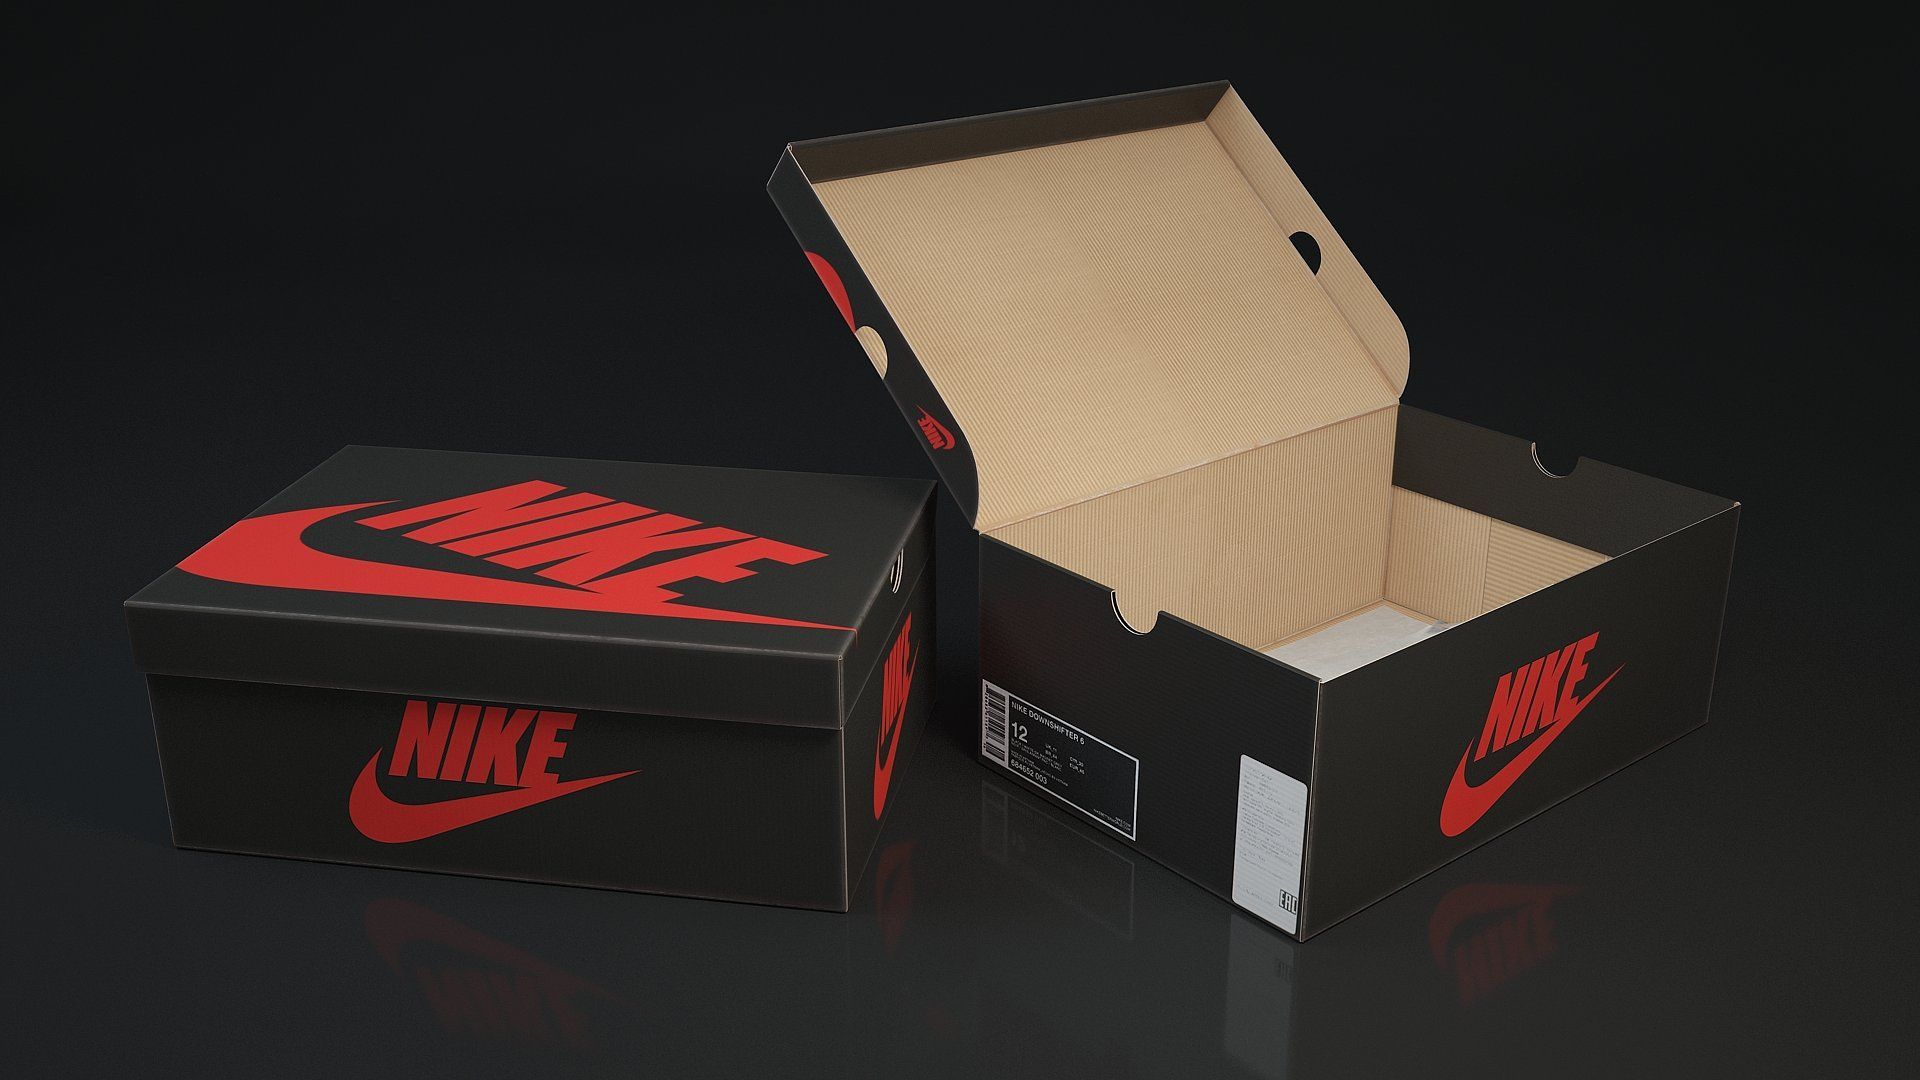 Shoe box Nike 3D 3D model #closed#open#types#created. Shoe box, Nike, Creative photohop